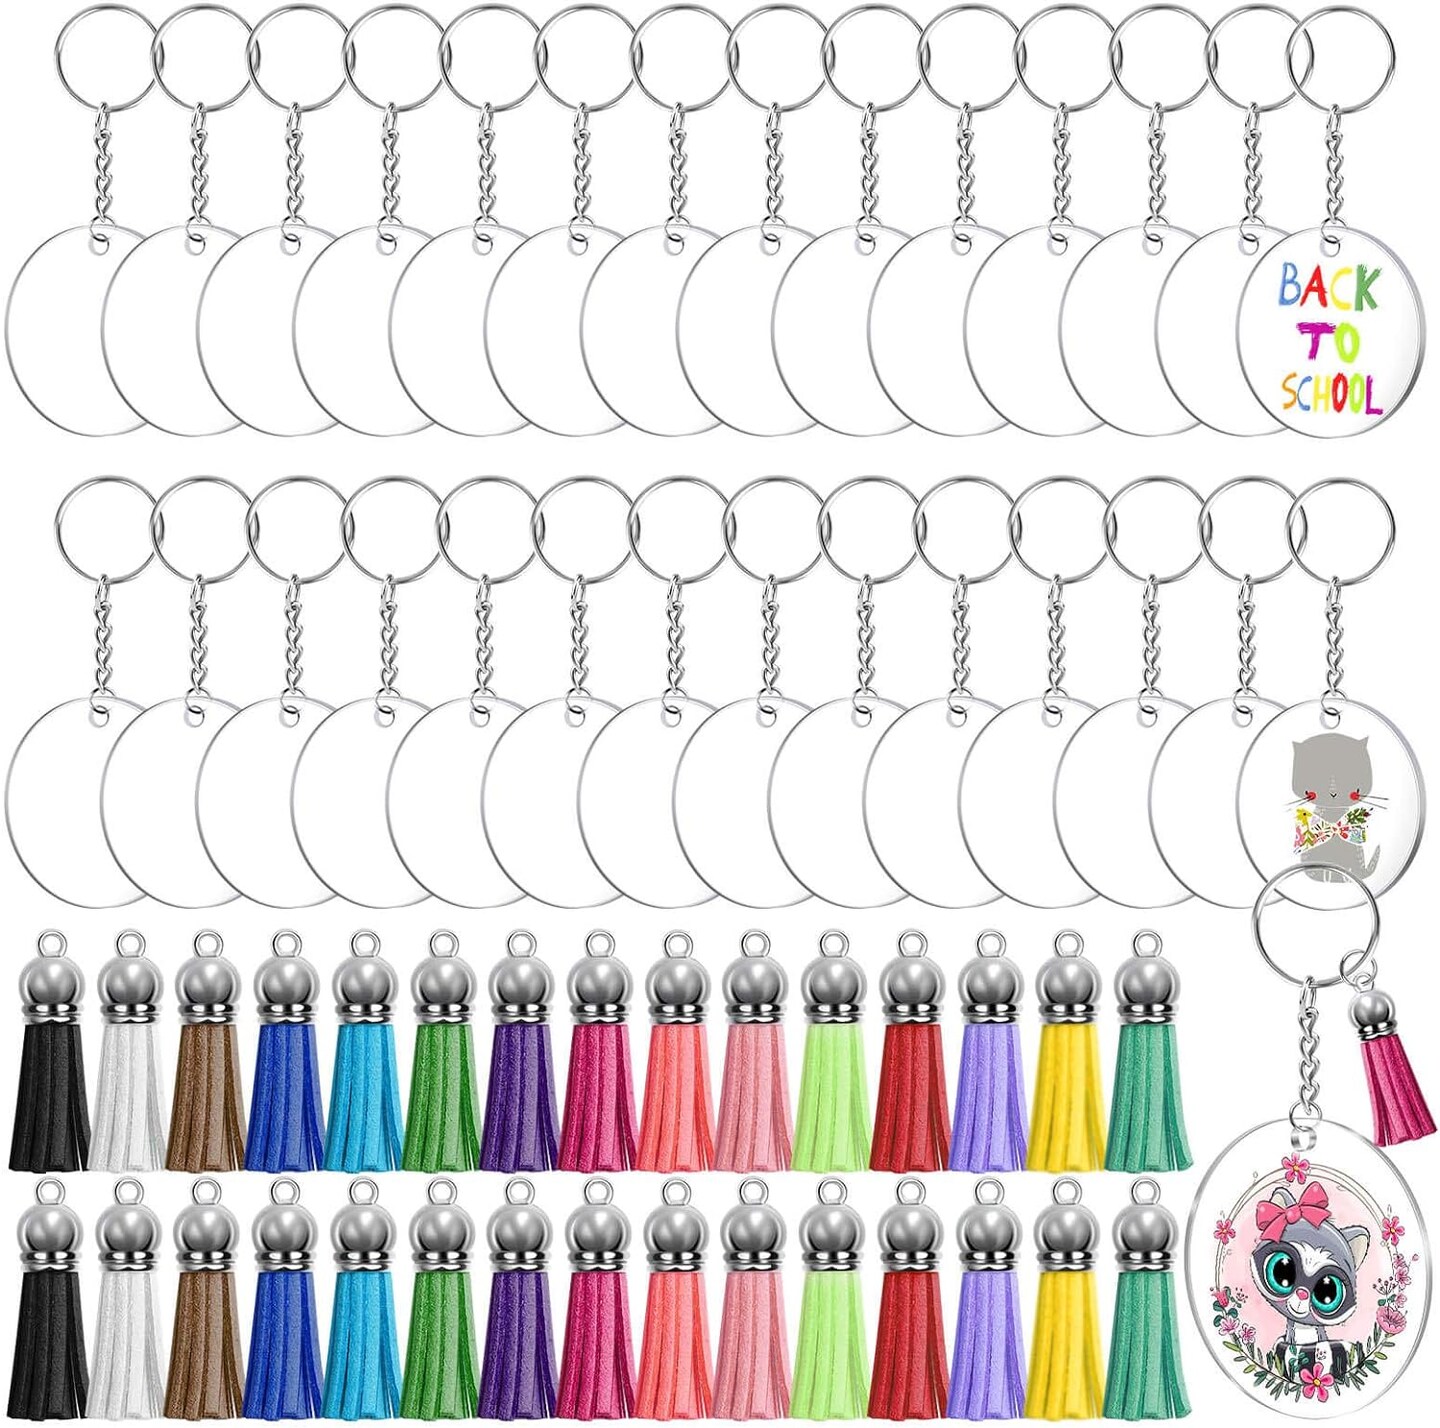 120pcs Acrylic Keychain Blanks for Vinyl Kit Including 30pcs Clear Acrylic Blanks, 30pcs Keychain Tassels, 30pcs Key Rings and 30pcs Jump Rings for DIY Key Chain Vinyl Crafting